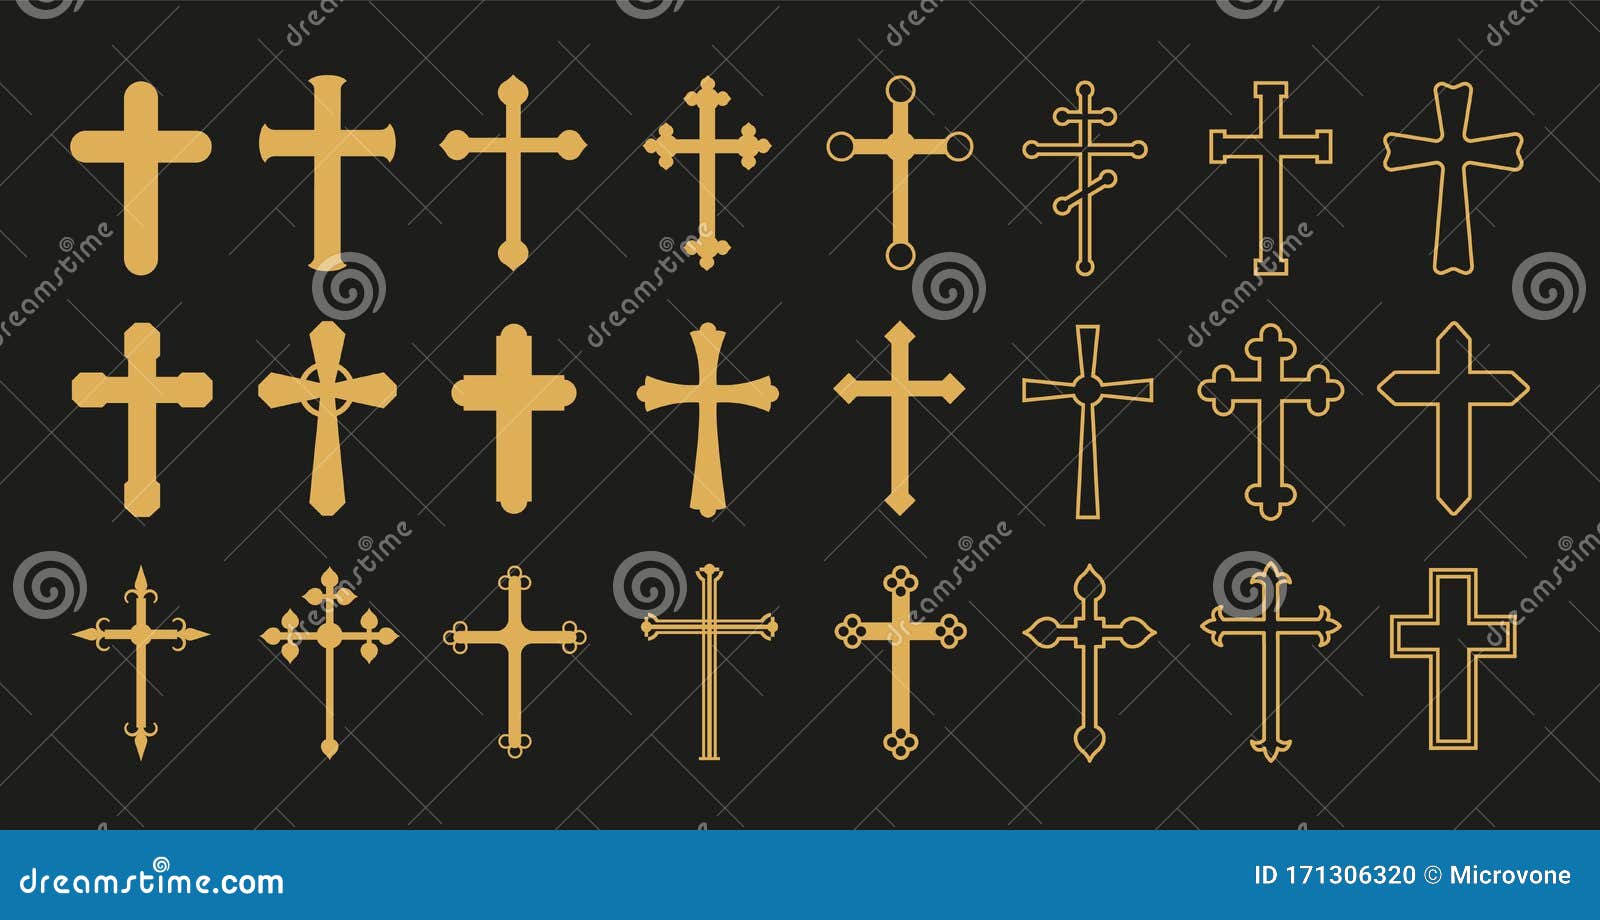 christian cross. gold crosses, simple decorative crucifix. catholicism church religion  s